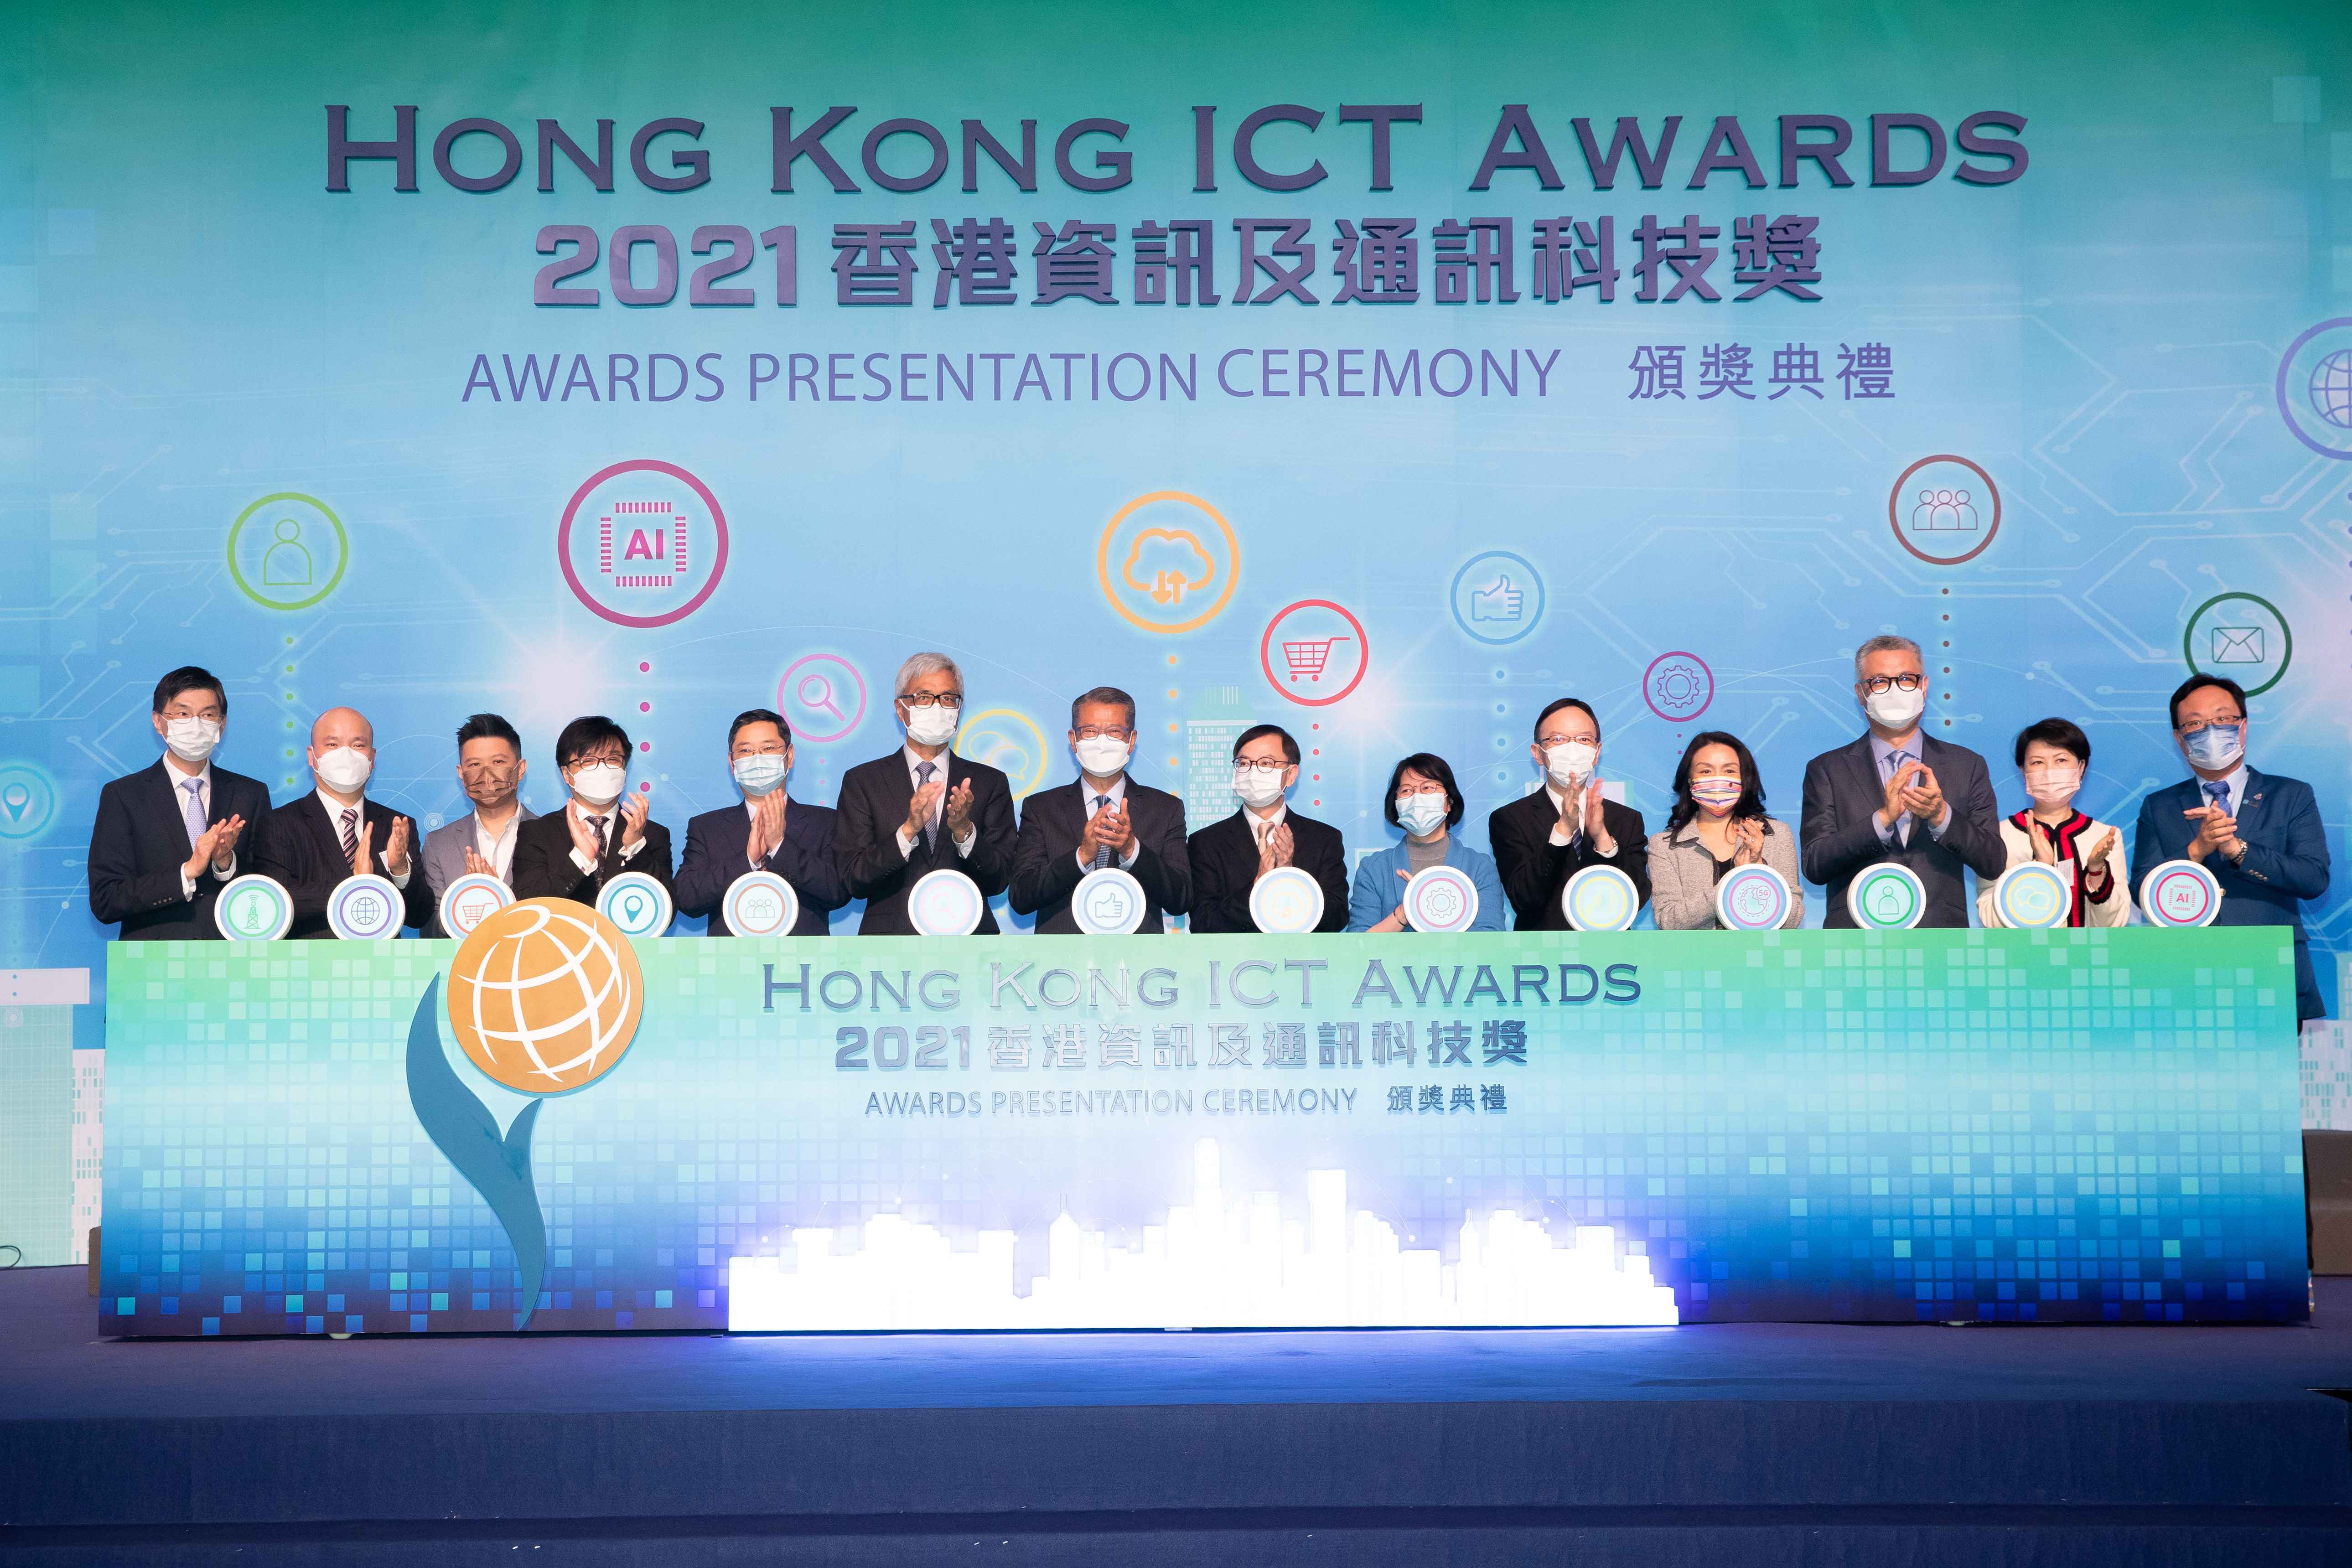 Hong Kong ICT Awards 2021 Awards Presentation Ceremony Kick-off Ceremony (after)